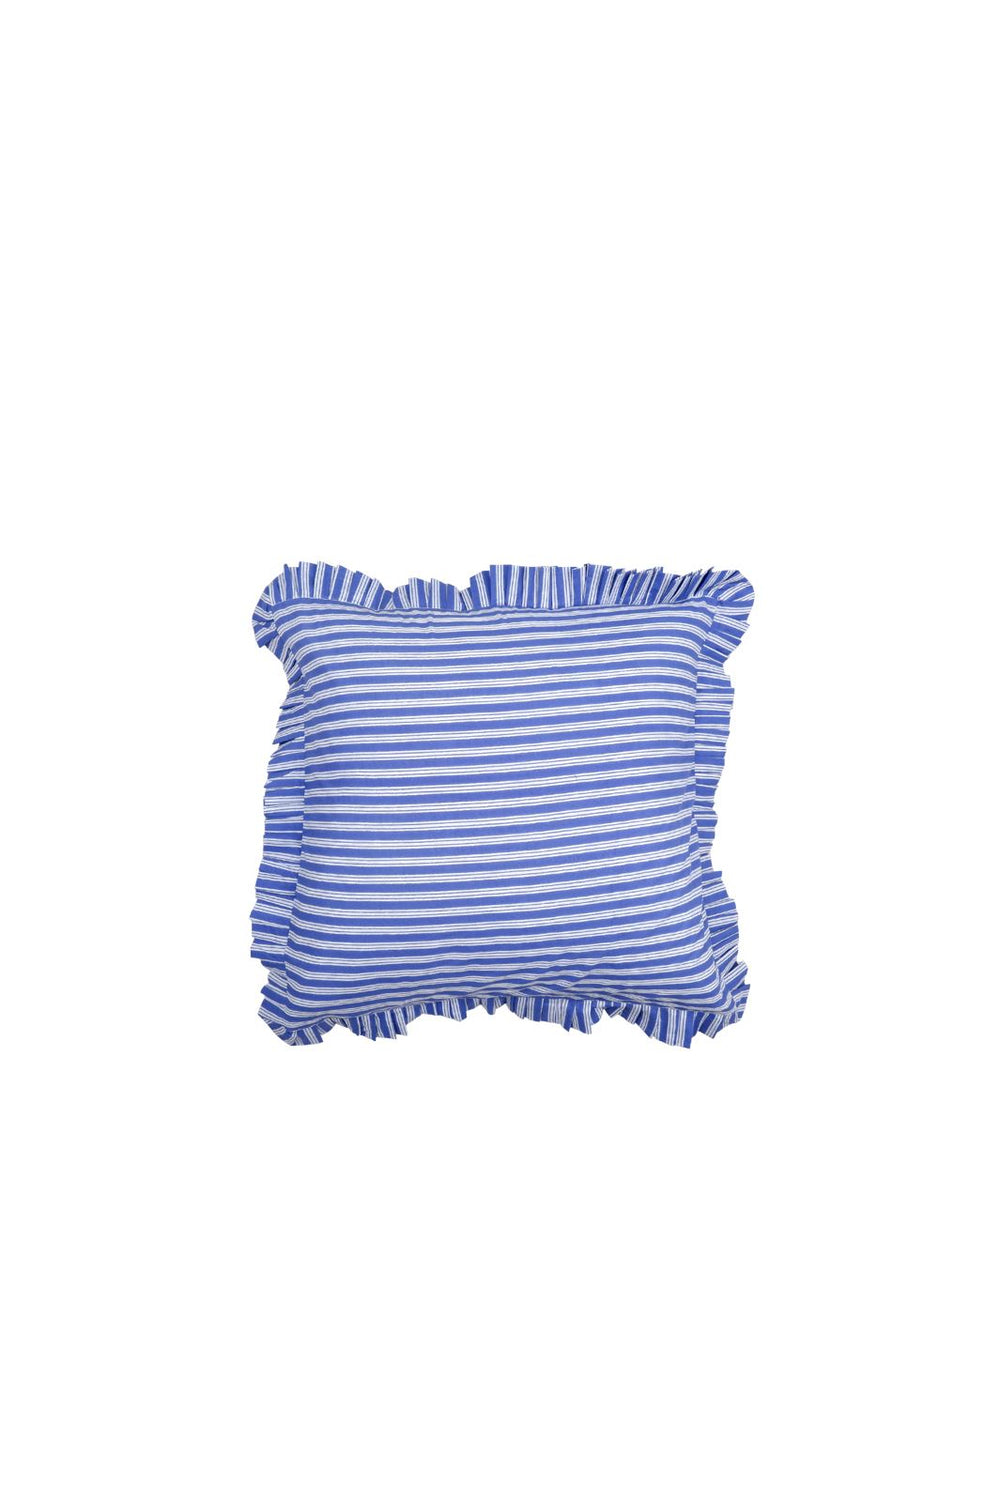 Black Colour - Bcflora Cushion Cover With Frill - Blue Stripe